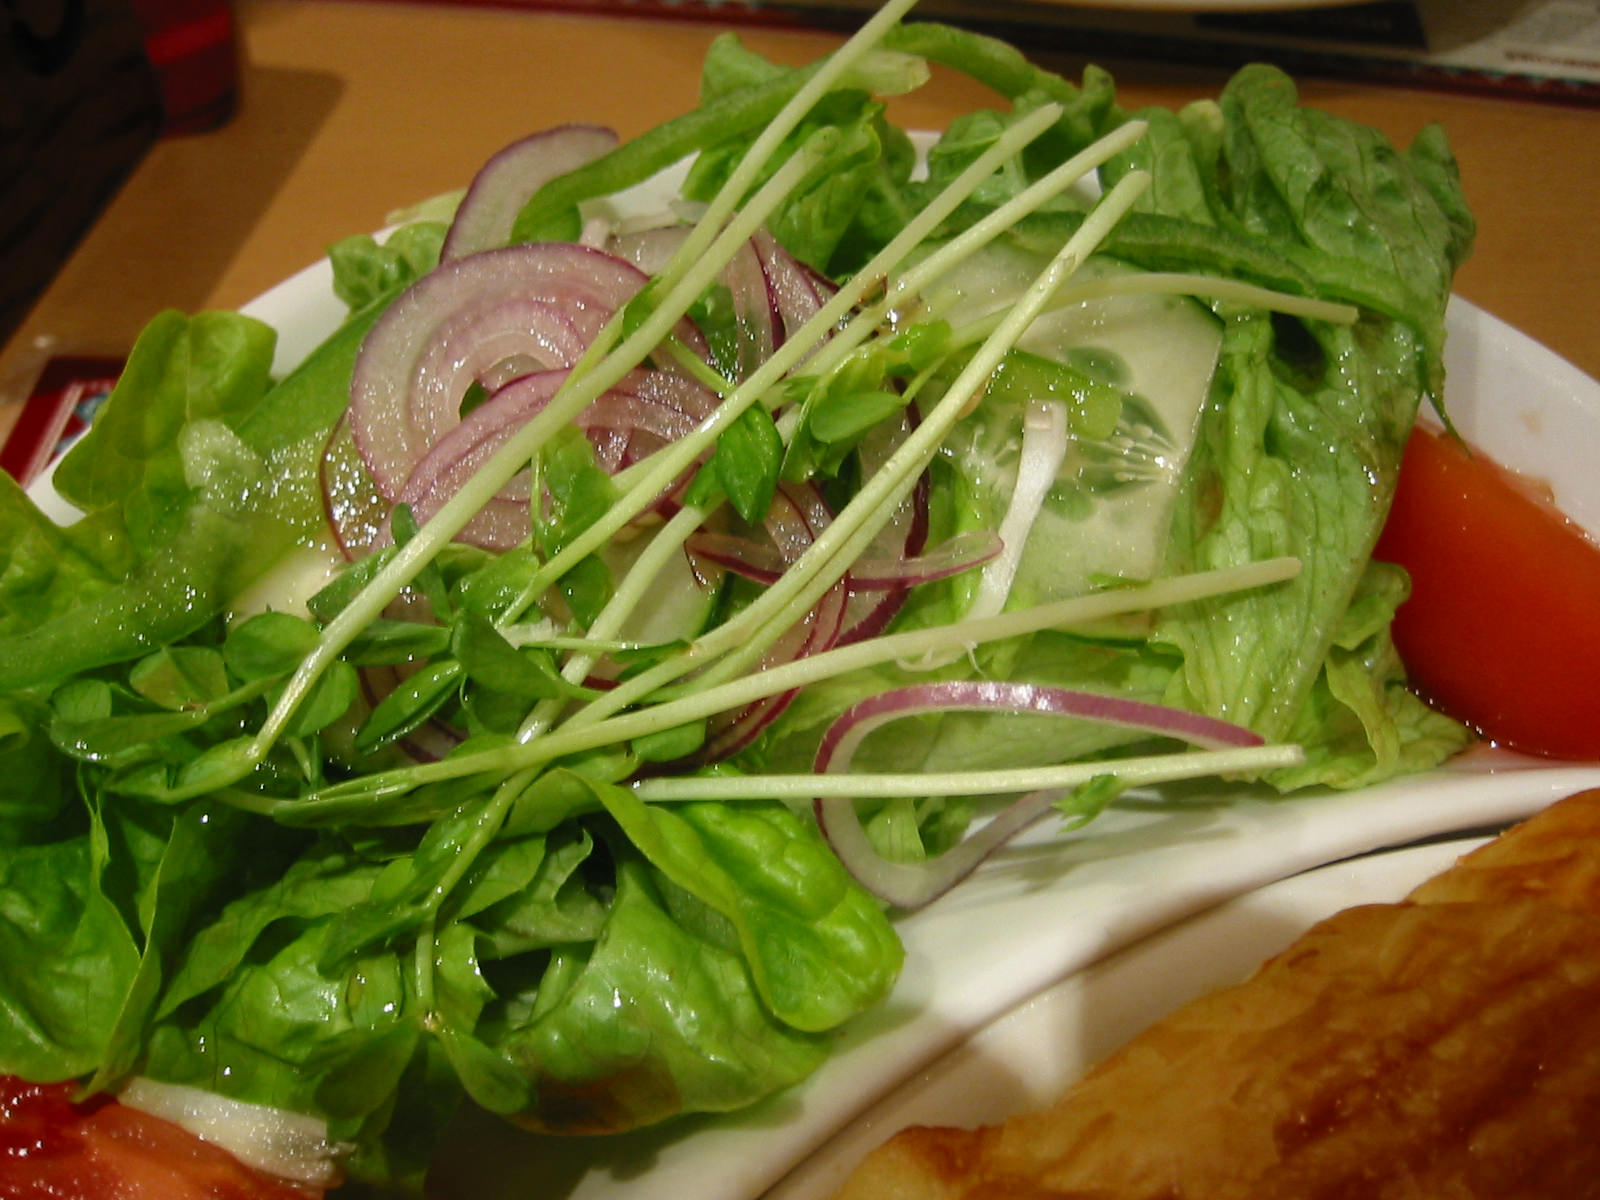 Garden salad with raspberry vinaigrette